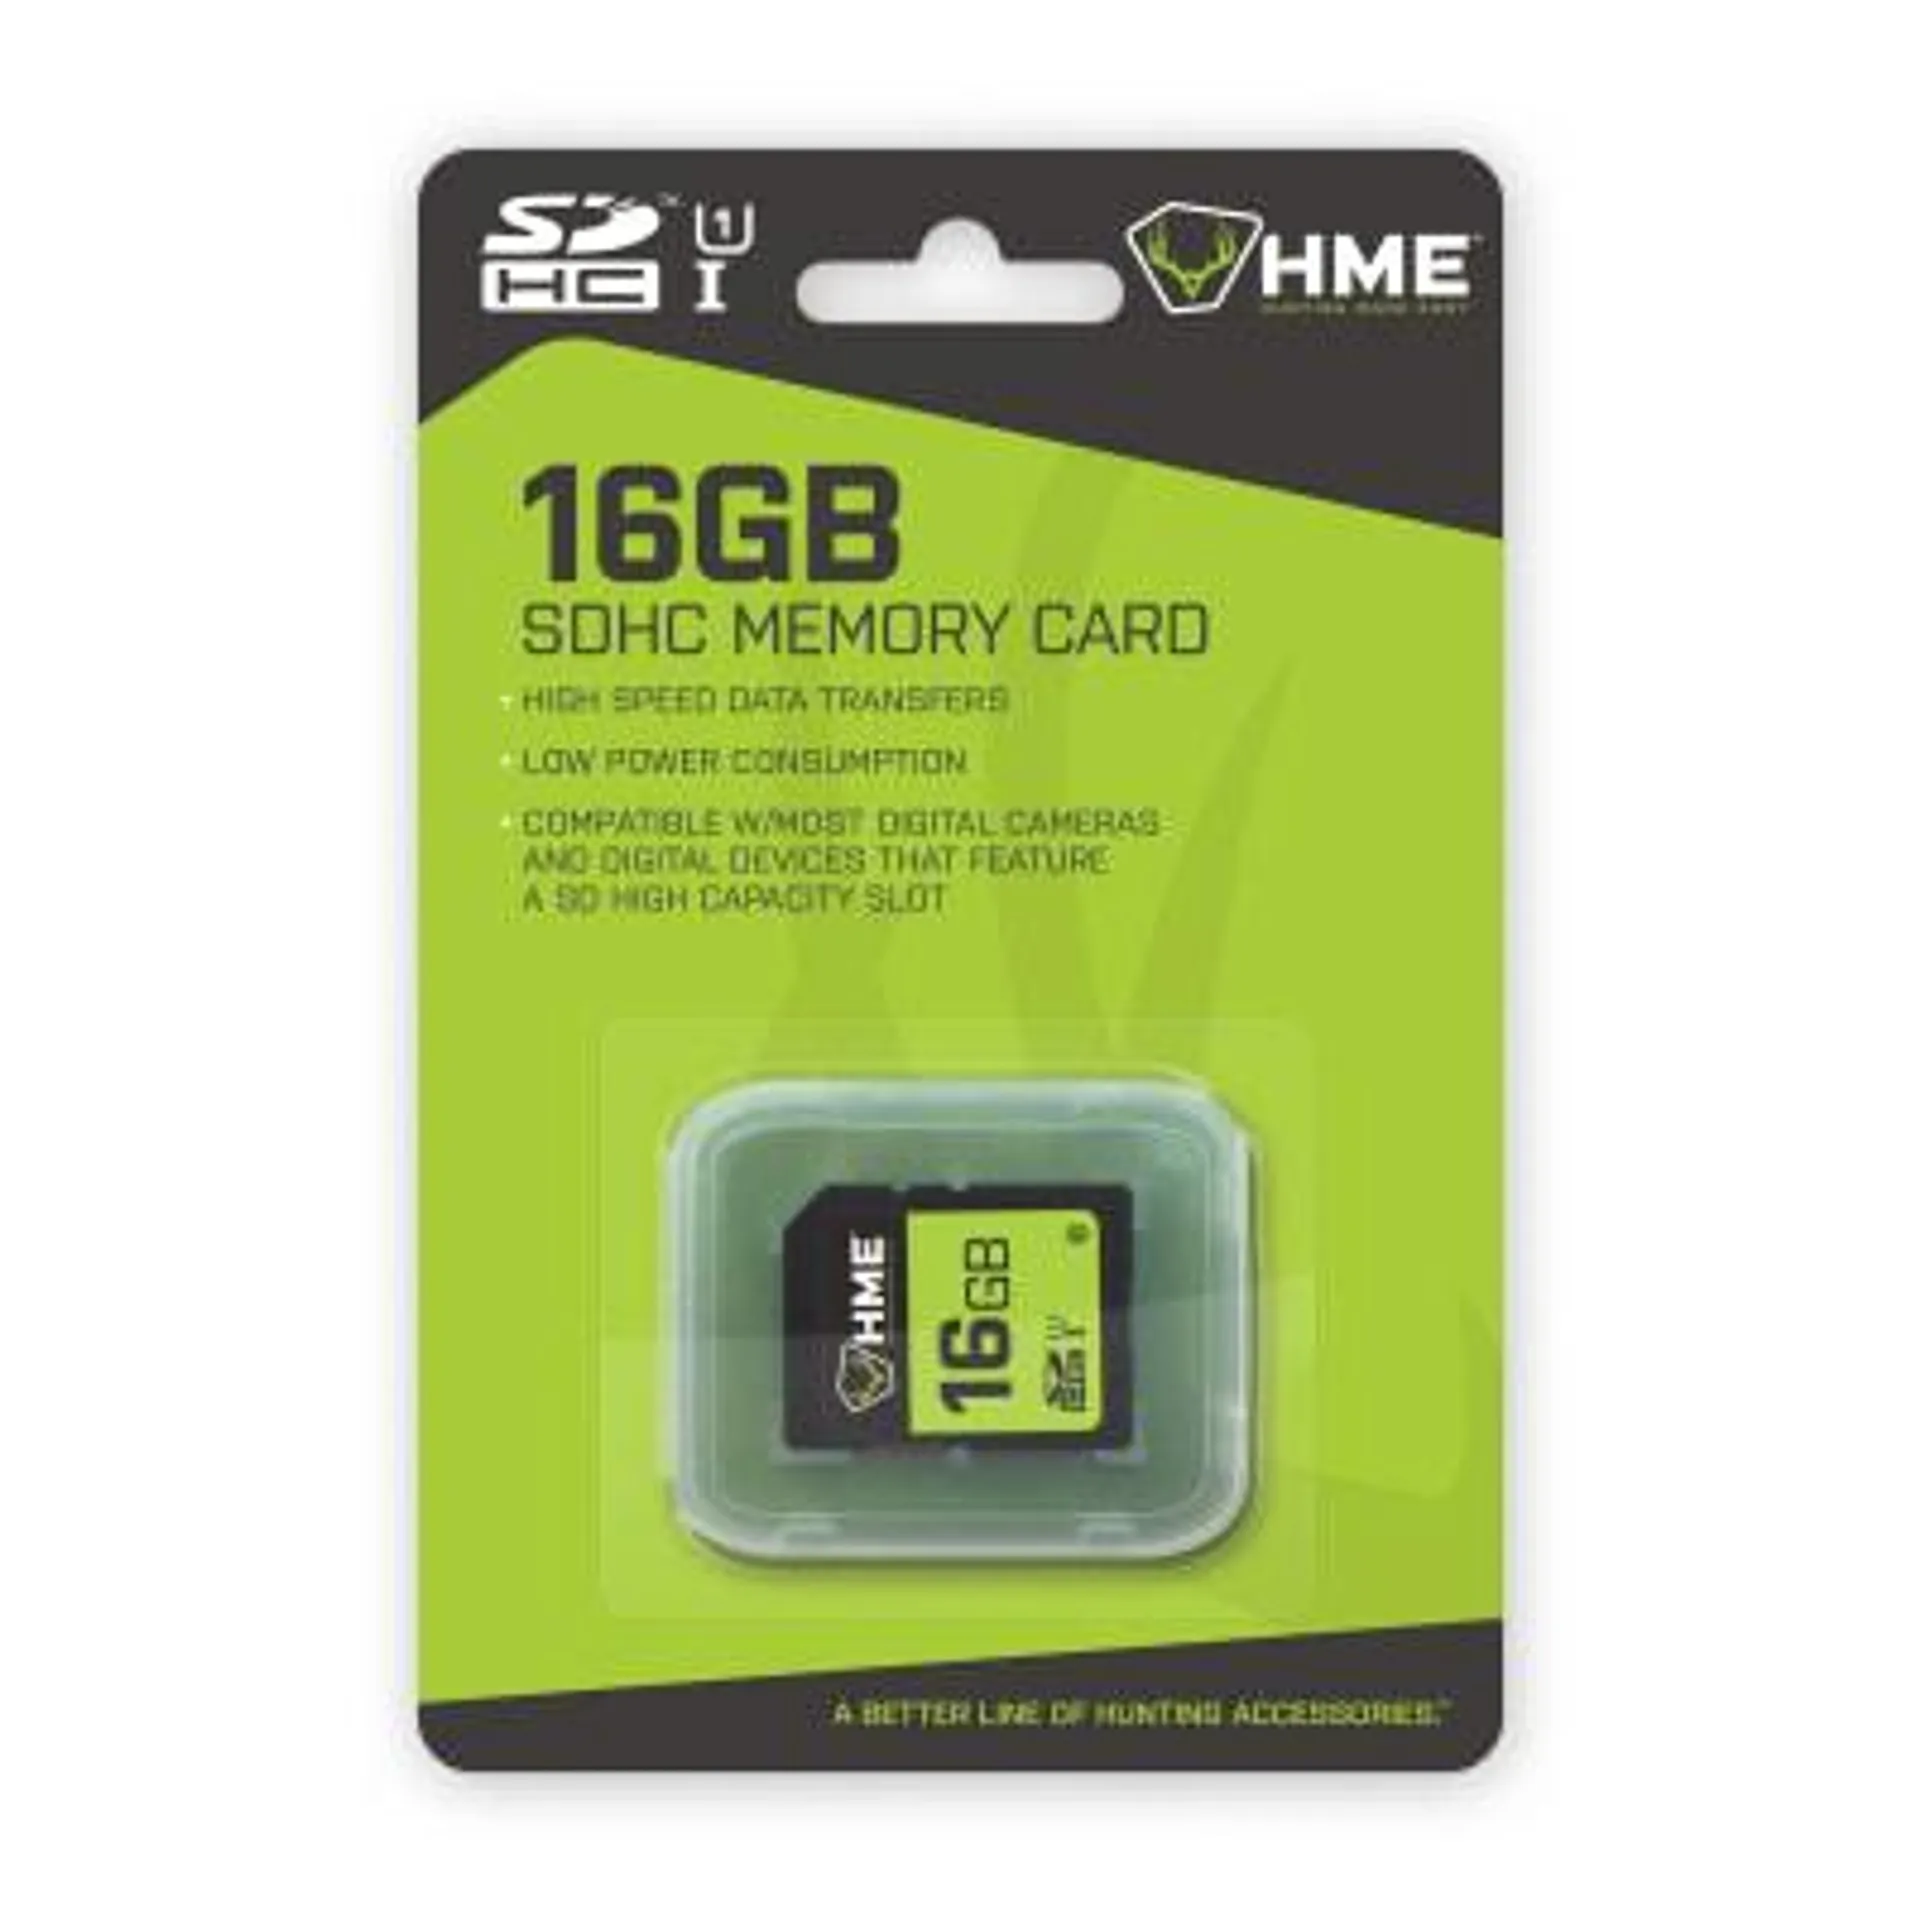 HME 16GB SD Memory Card